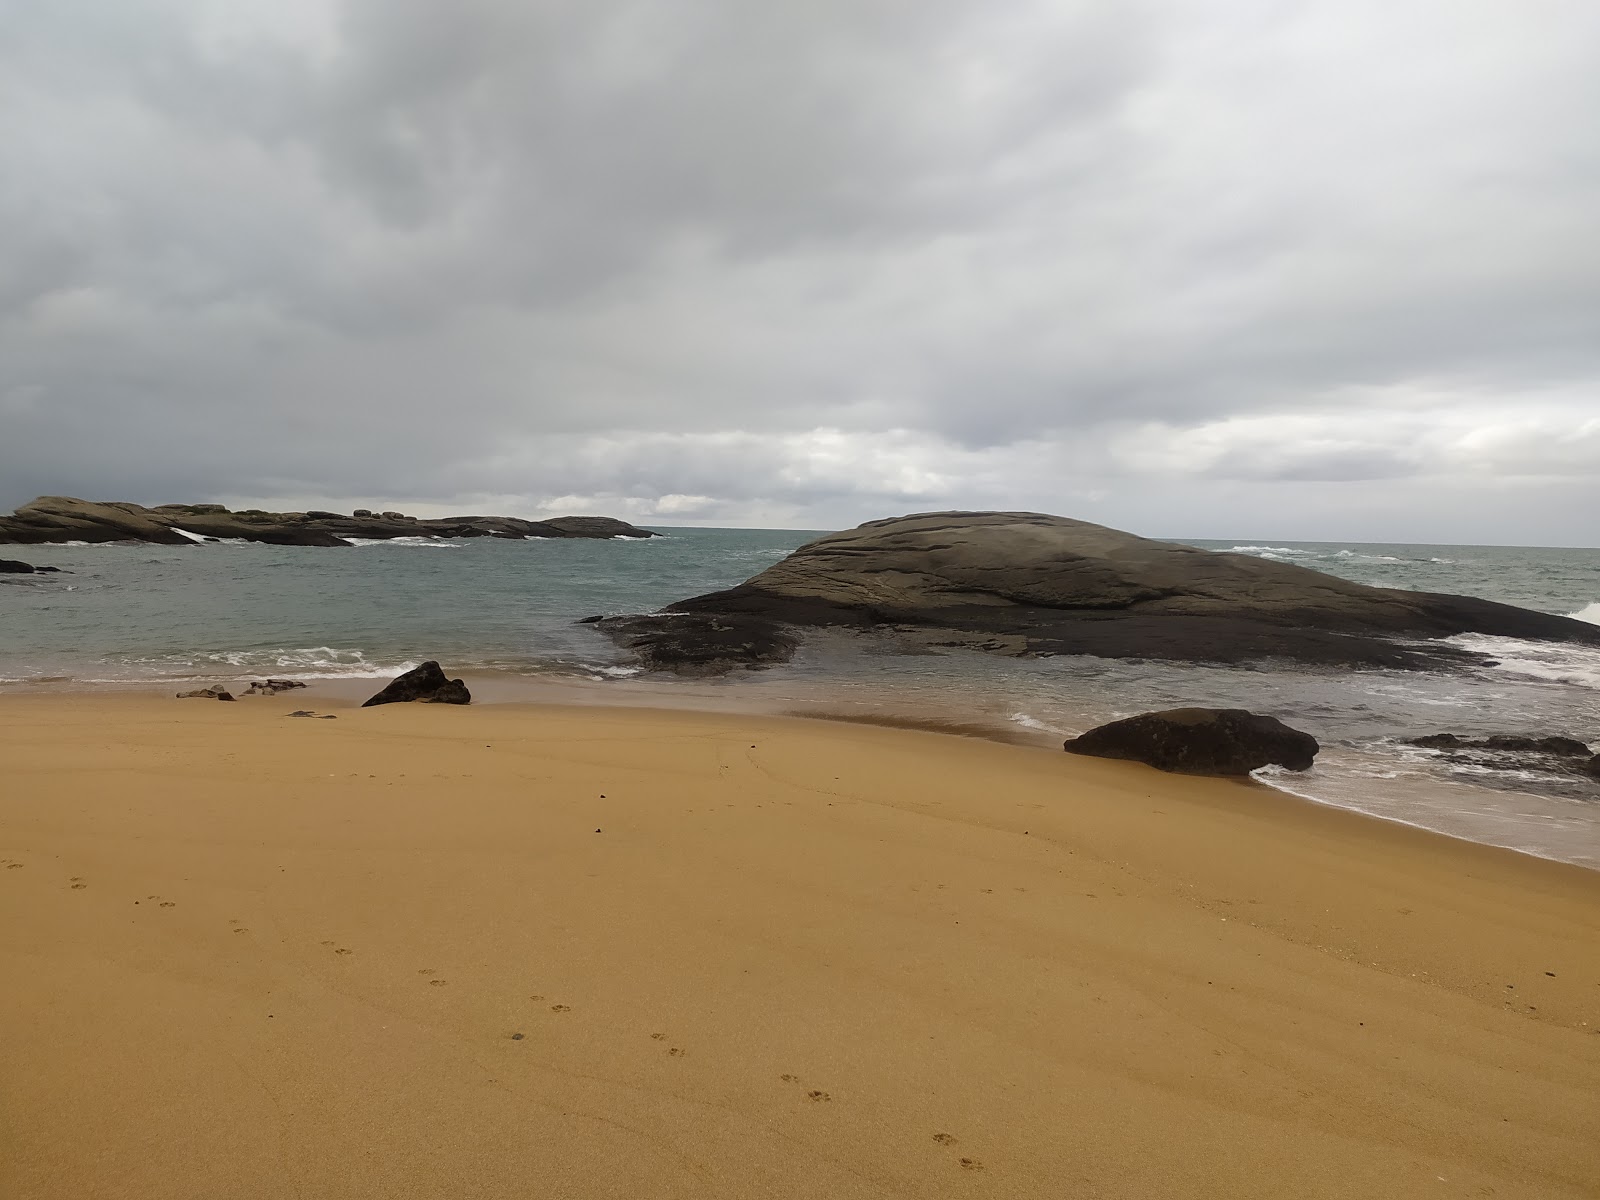 Fotografija Gemeas plaže nahaja se v naravnem okolju